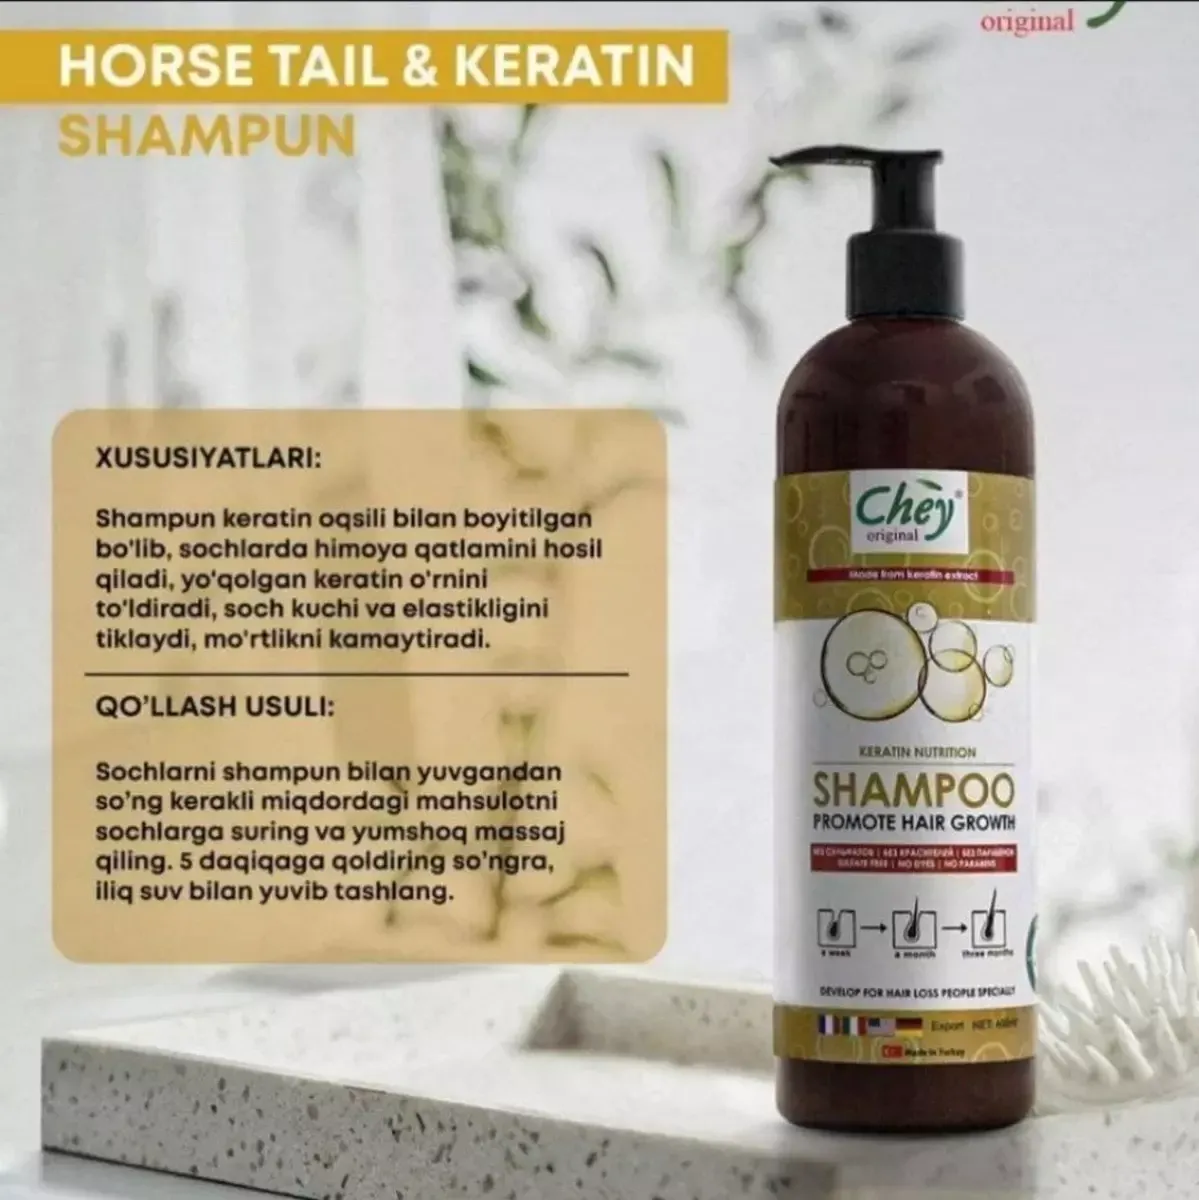 Шампунь Horse tail & keratin#1